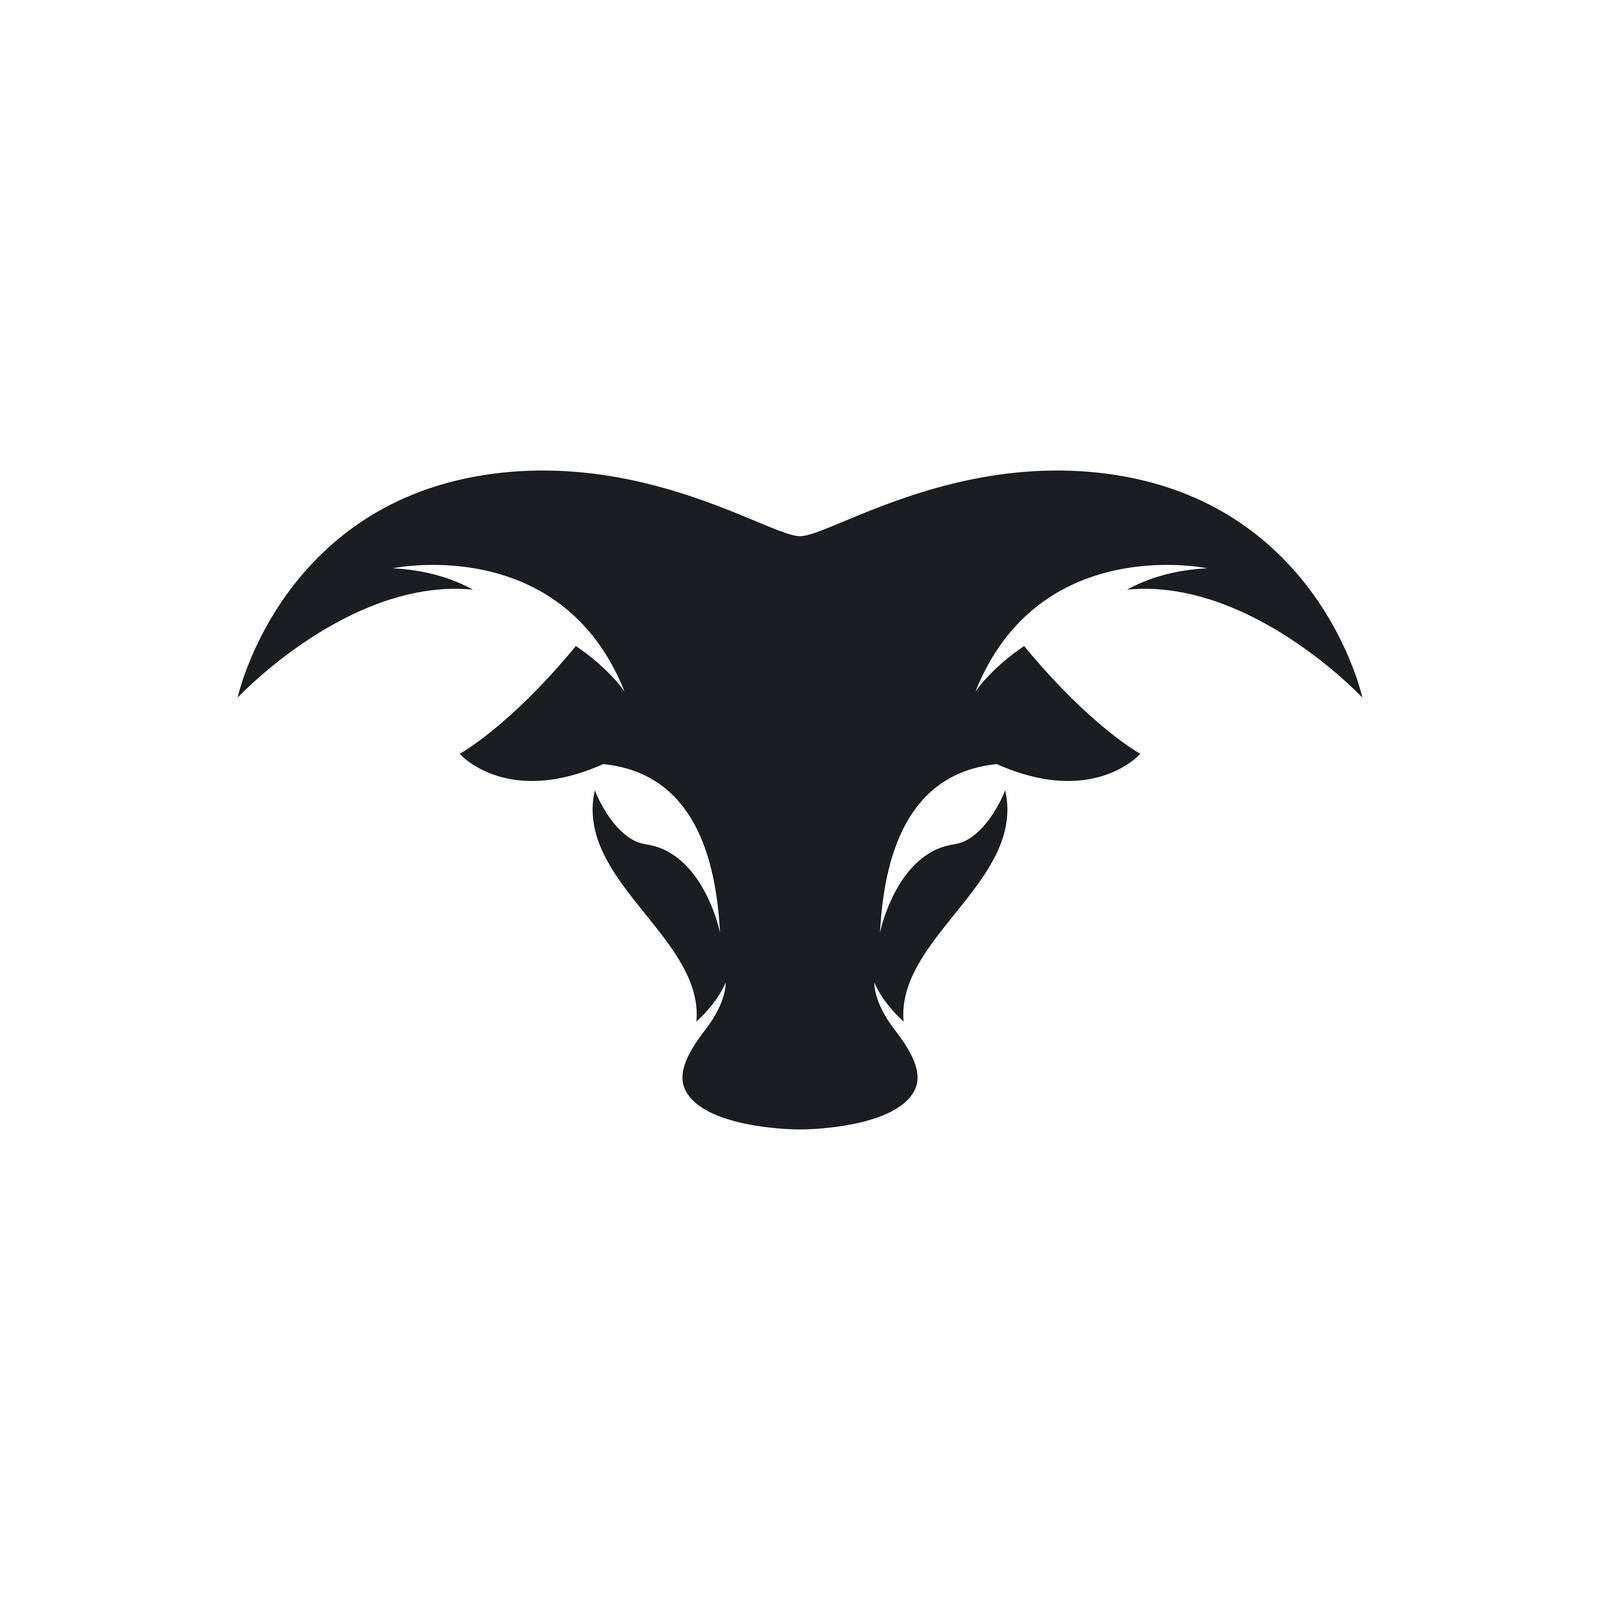 Bull head logo vector icon by Attades19